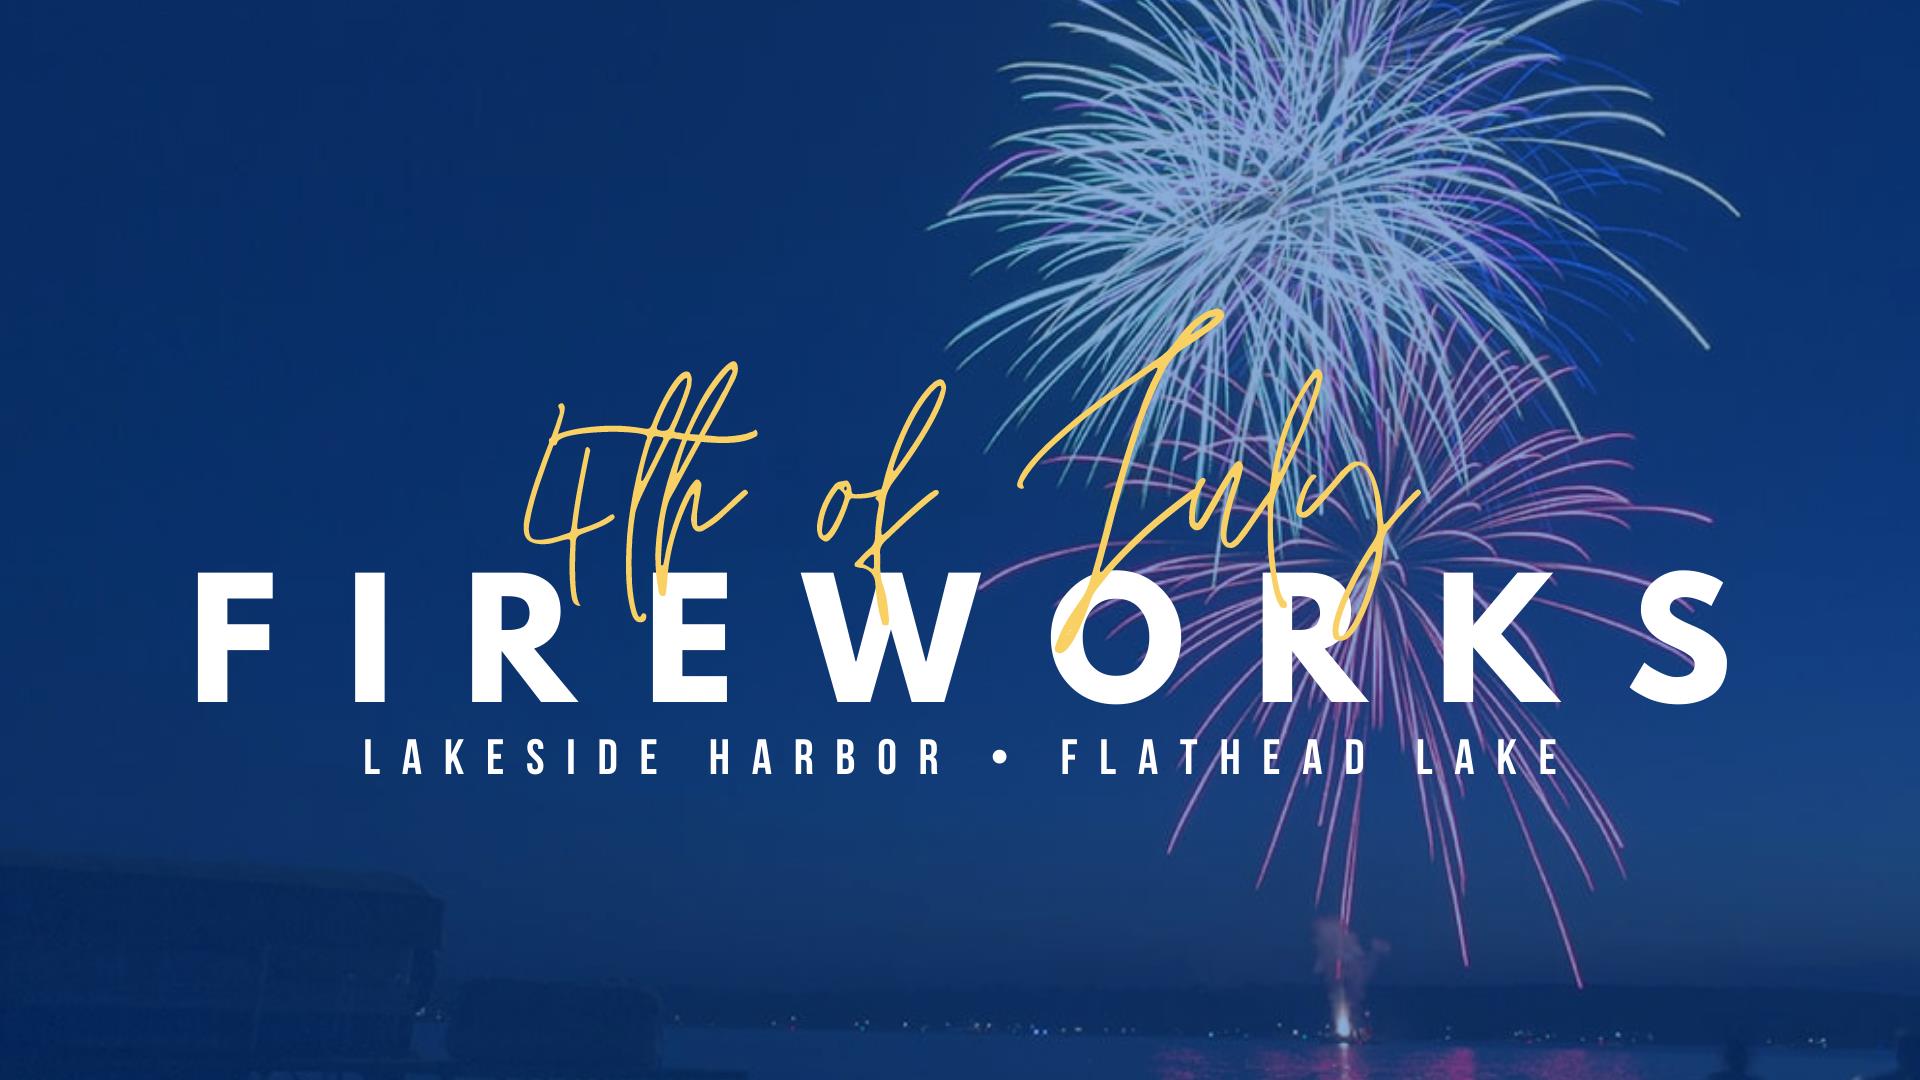 4th of July Fireworks
Lakeside Harbor | Flathead Lake | Lakeside MT